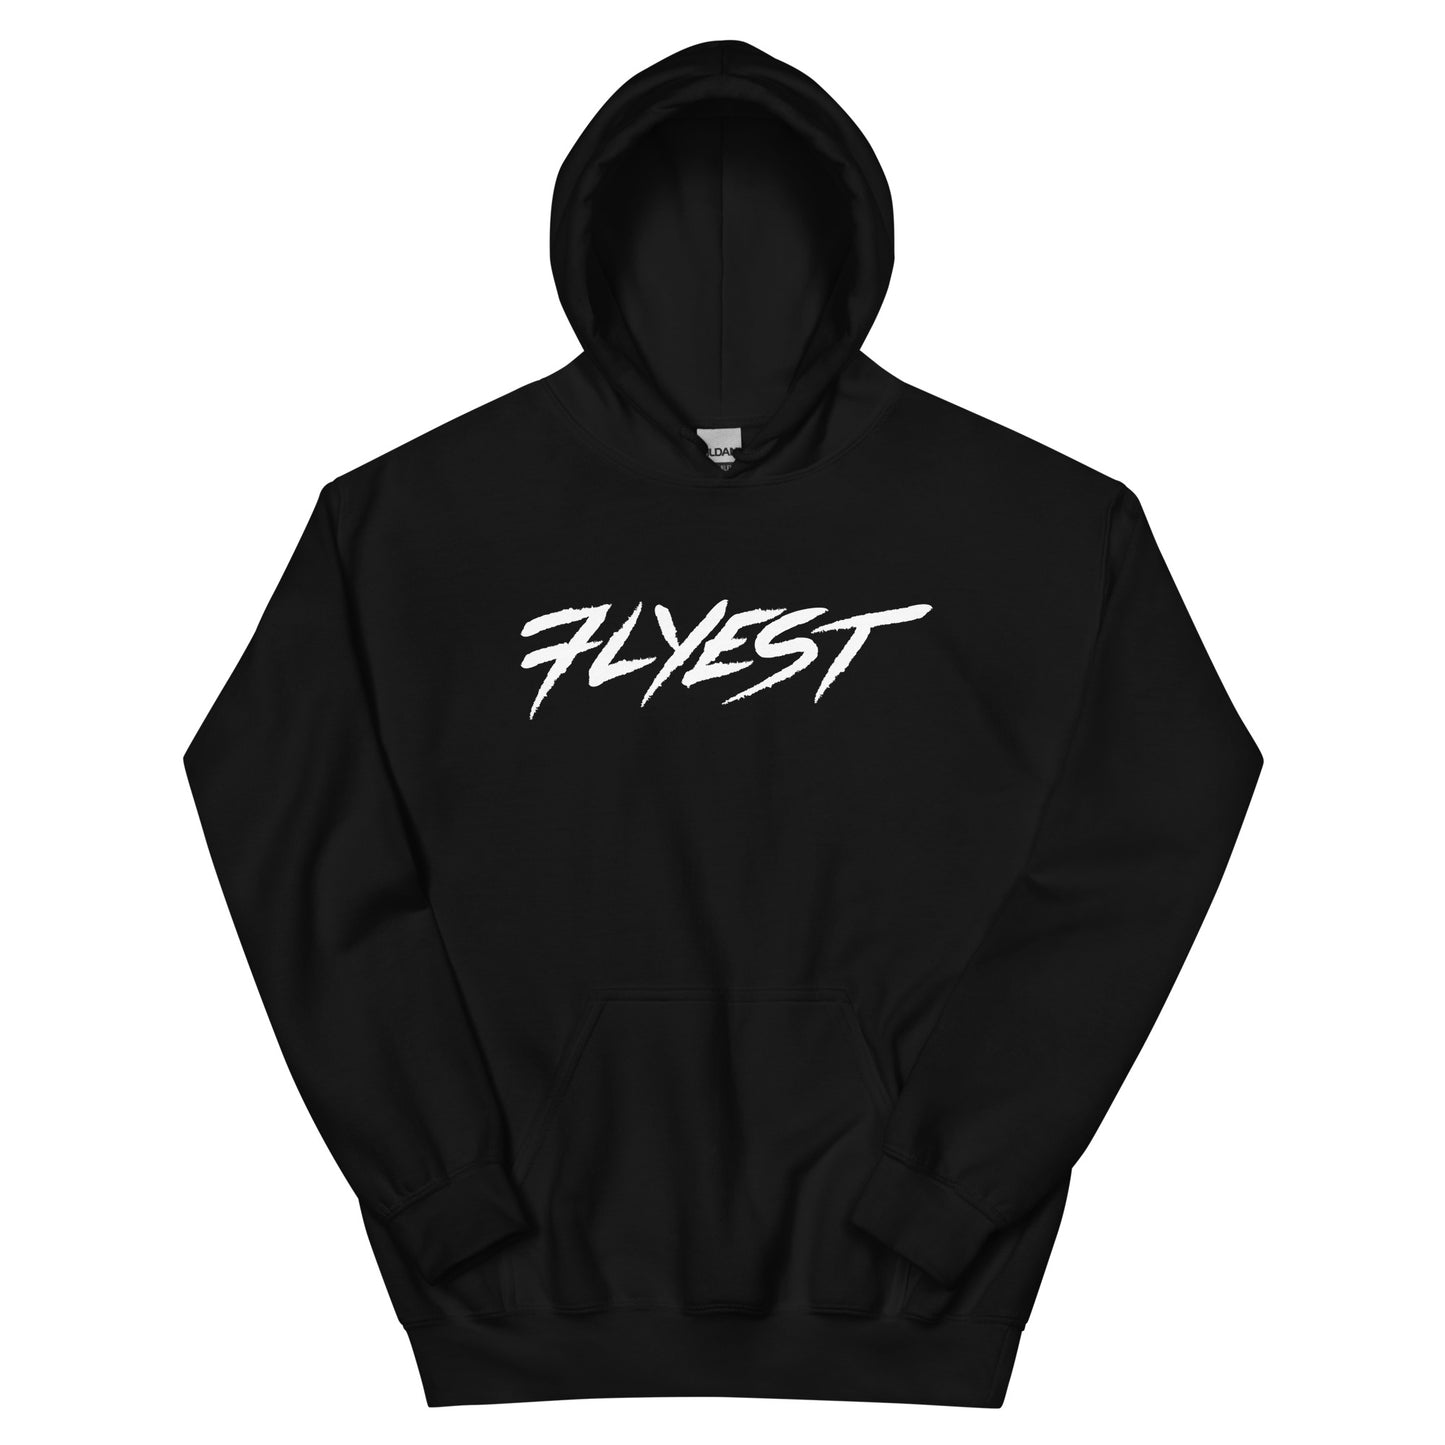 Flyest Paint hoodie